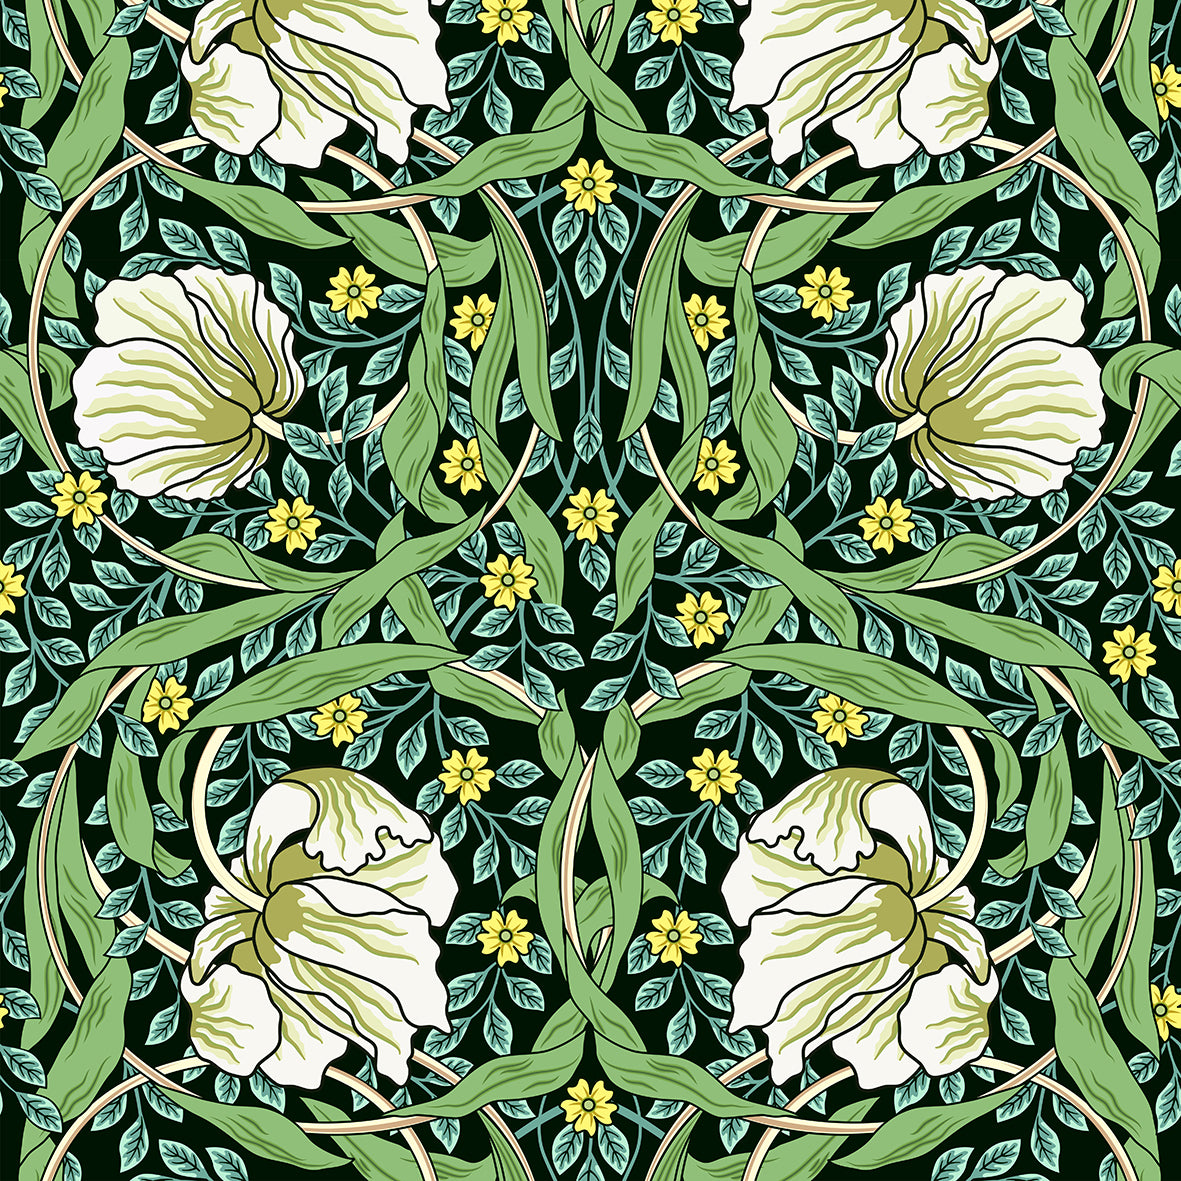 william-morris-co-luxury-velveteen-minky-blanket-two-sided-print-pimpernel-collection-slate-green-16